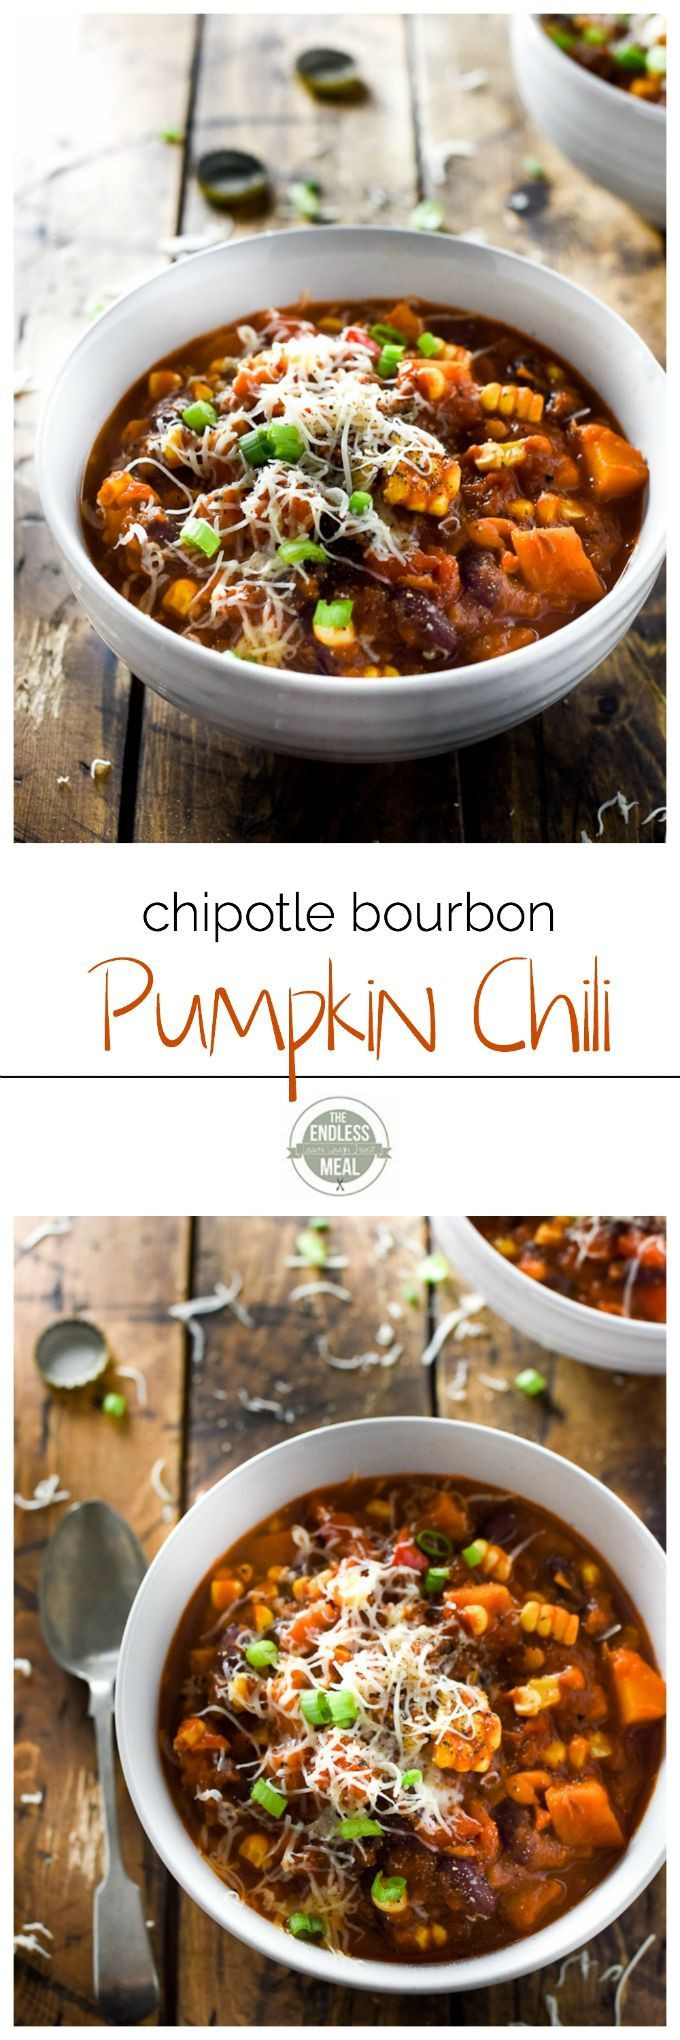 Vegetarian Fall Dinner Recipes
 1000 ideas about Pumpkin Chili on Pinterest